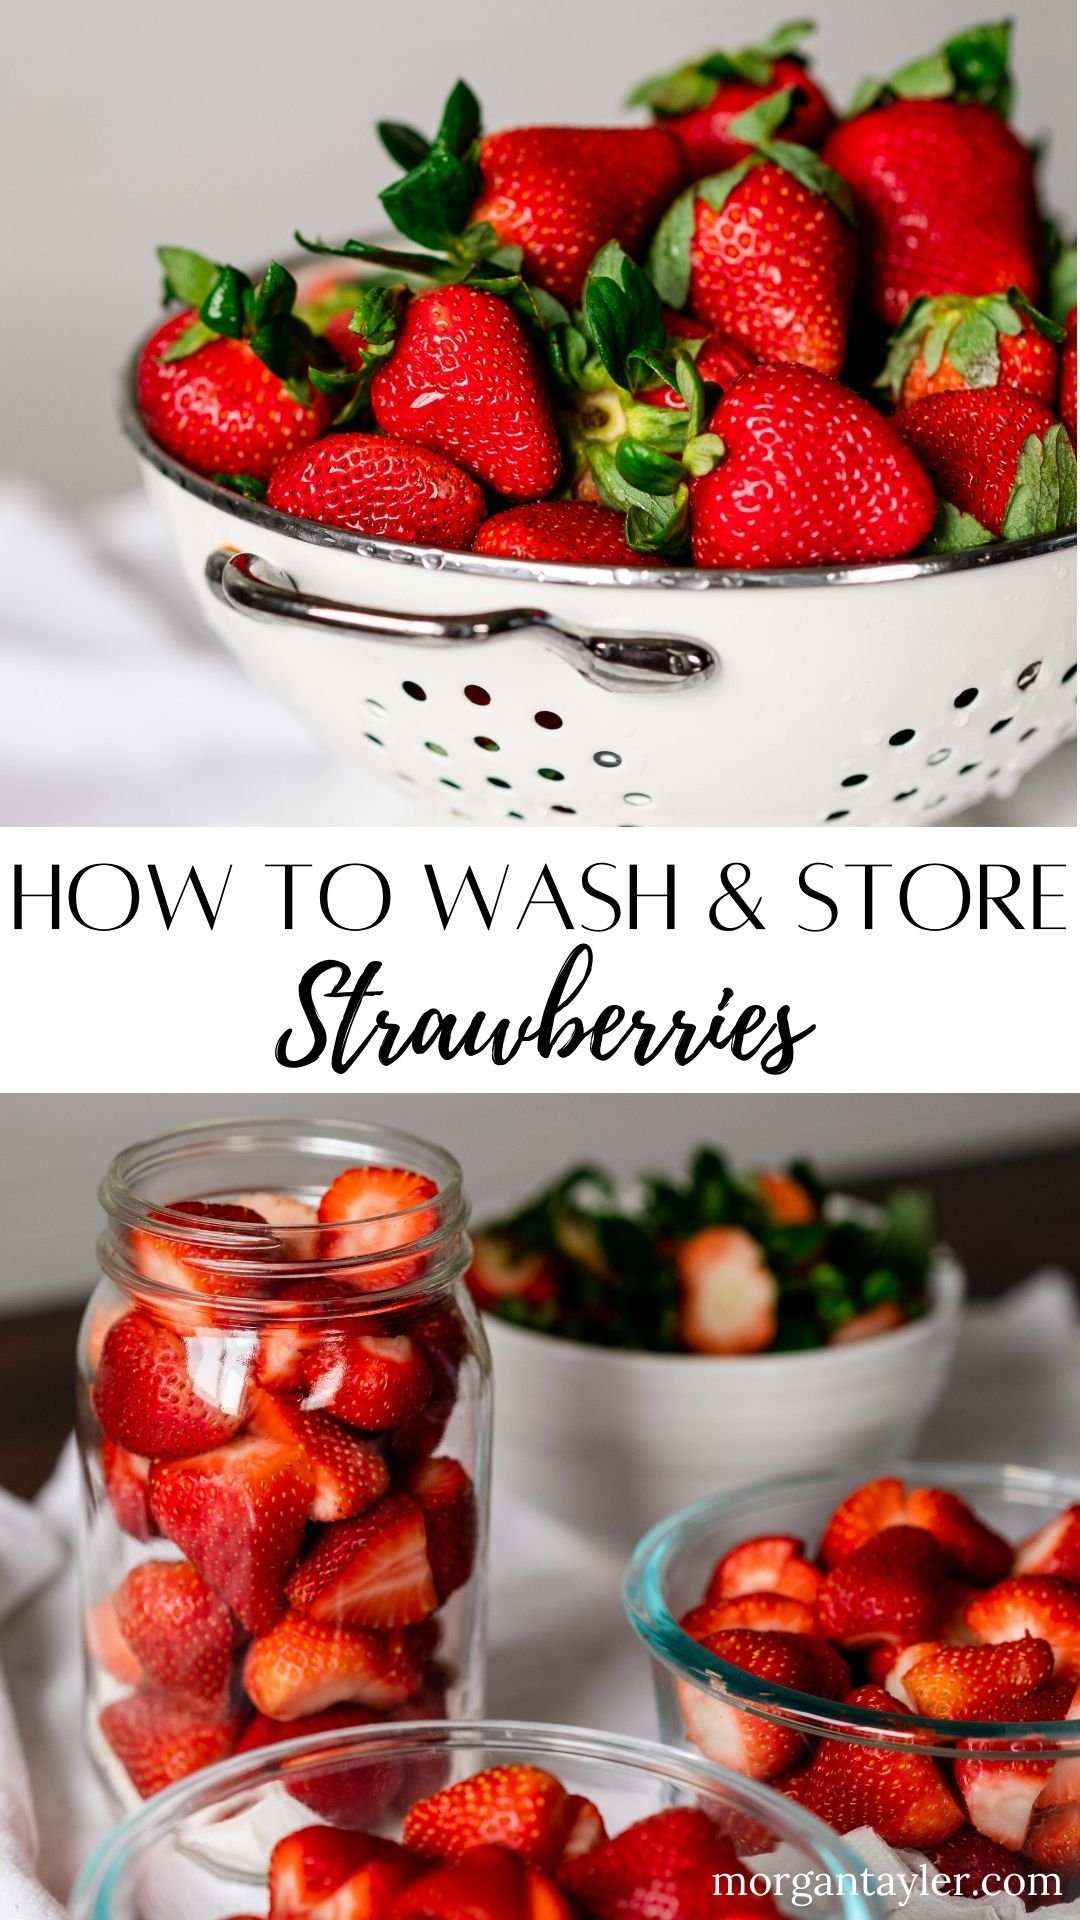 https://images.squarespace-cdn.com/content/v1/587e93c7e58c621e102357a6/6e86fe67-c106-47b3-822d-6dd75c5645d3/Best+Way+To+Wash+%26+Store+Strawberries+-+How+to+Wash+%26+Store+Fresh+Strawberries+-+Wash+Strawberries+with+Vinegar+-+Strawberry+Storage+-+Make+Strawberries+Last+Longer+in+Fridge+-+Morgan+Tayler+-+Food+For+Families